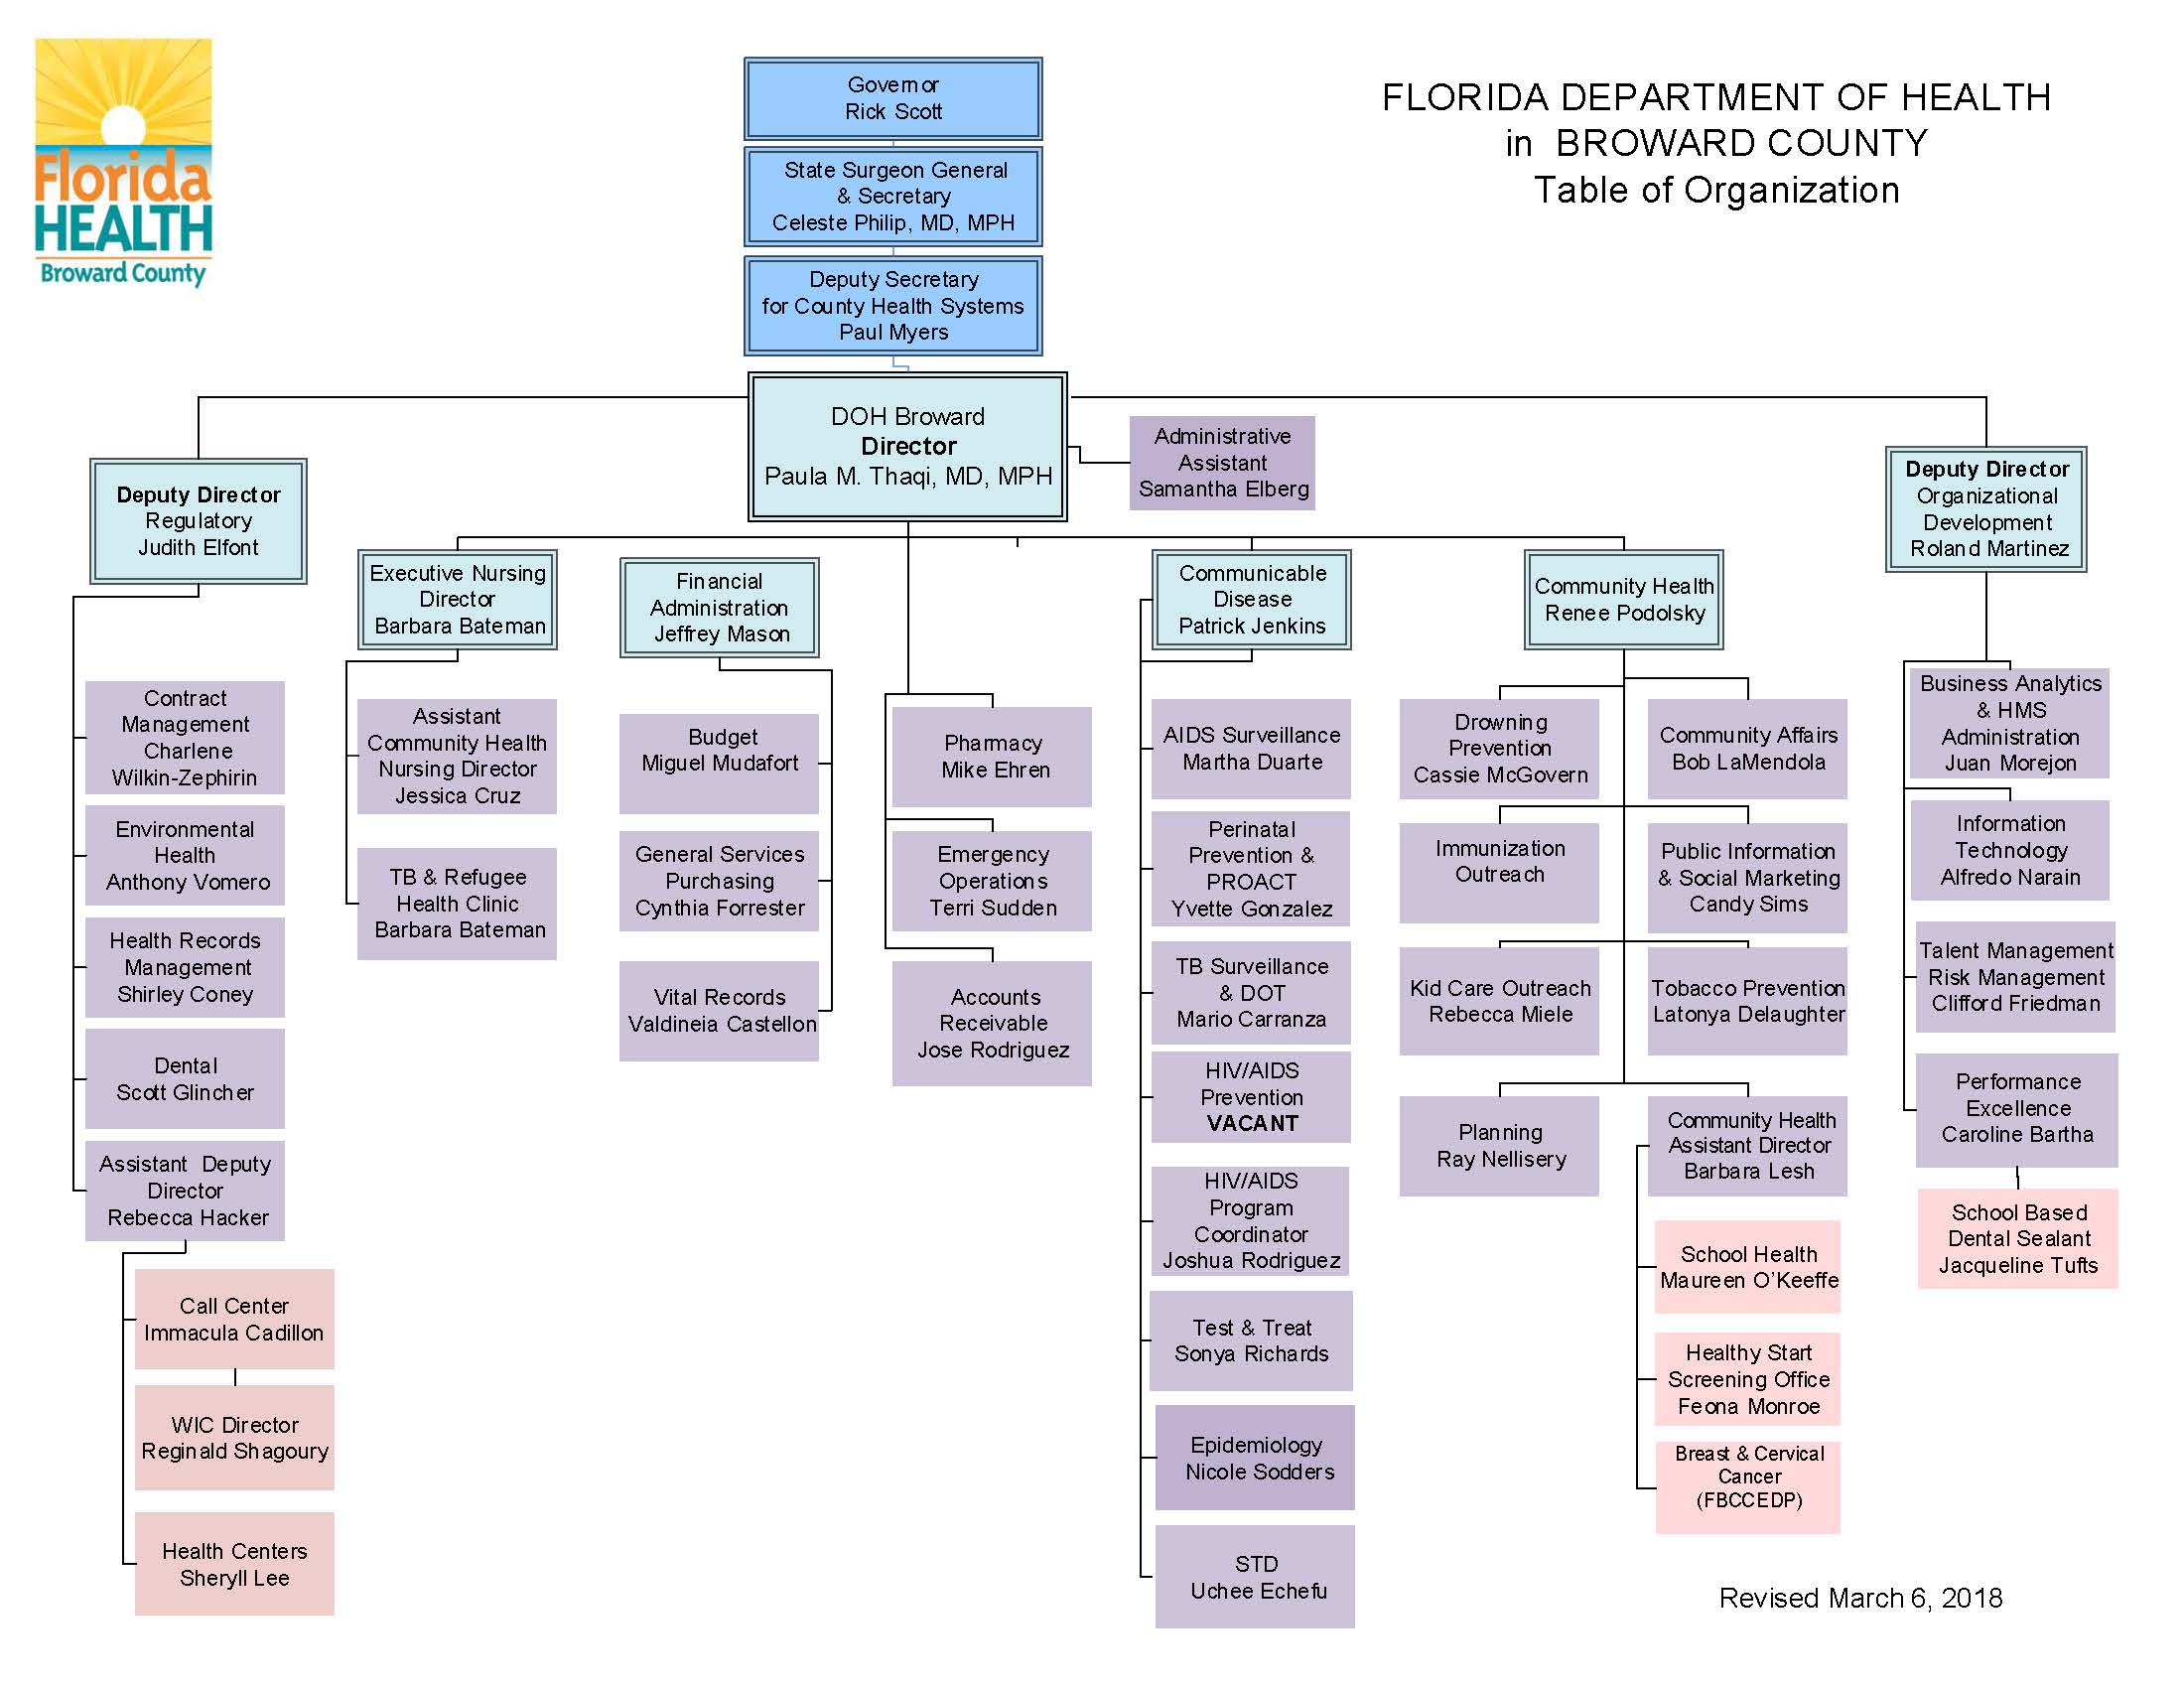 DOHBroward Organizational Chart Florida Department of Health in Broward